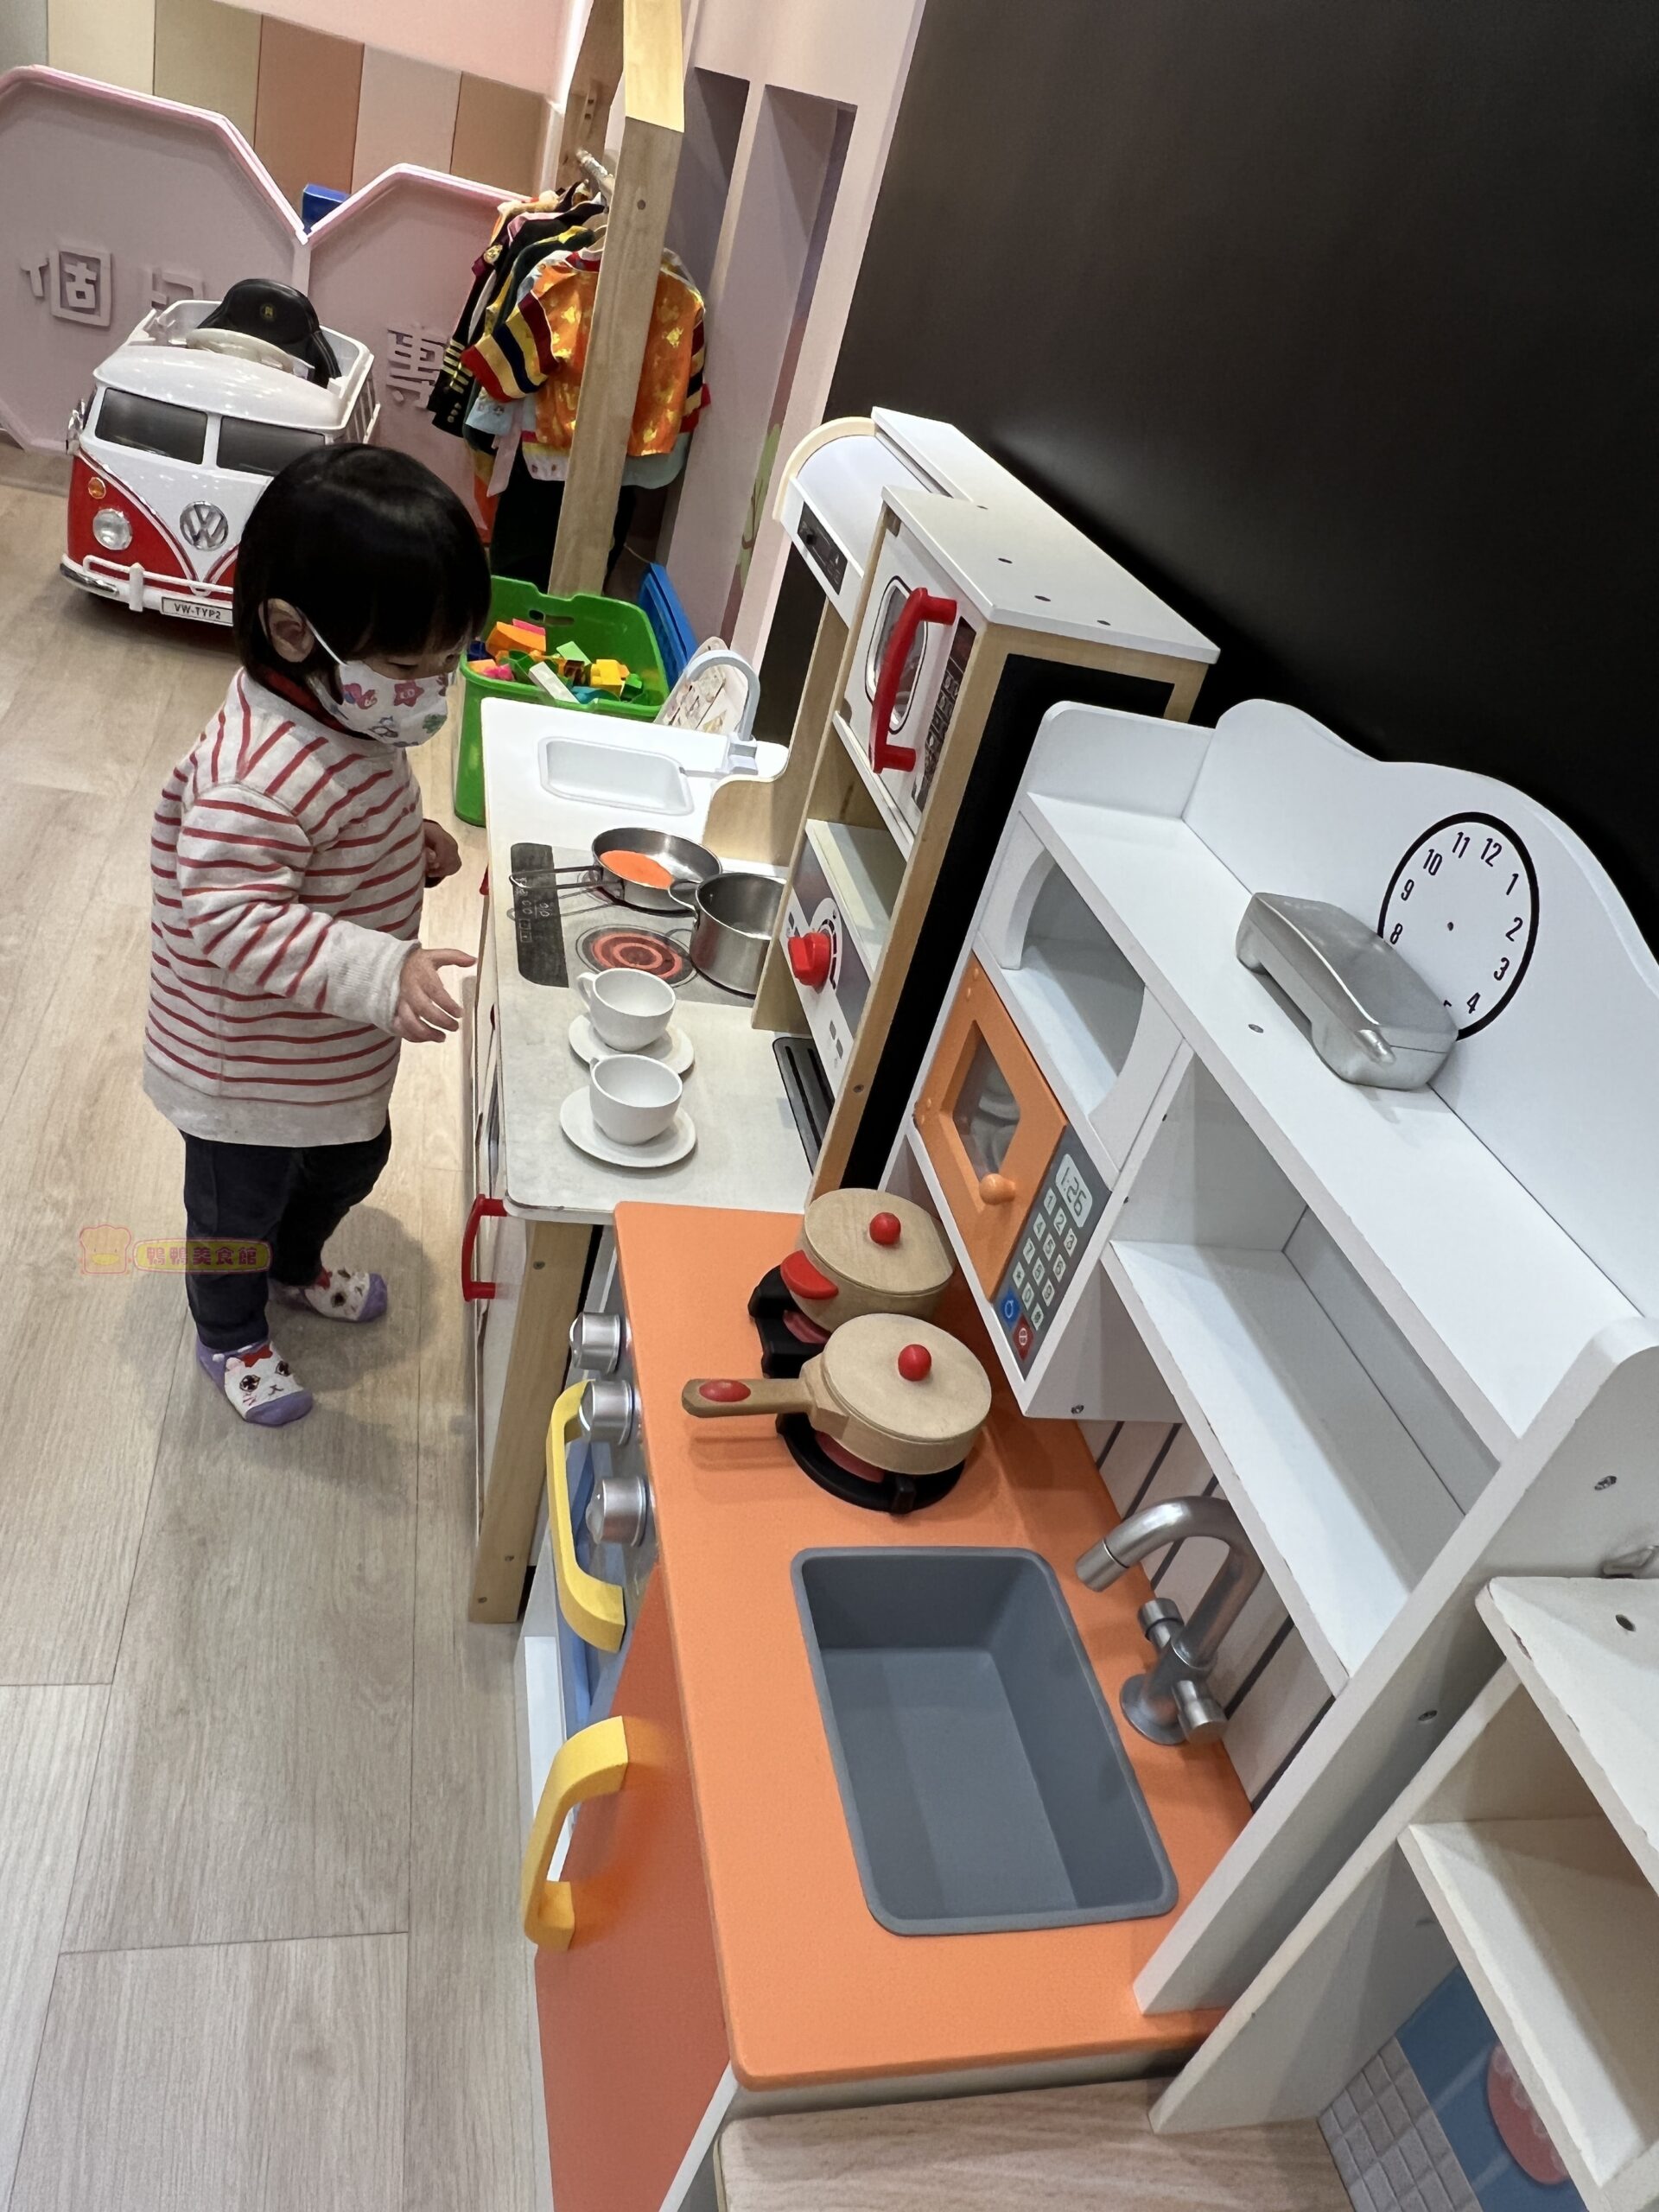 wifi提供,免費wifi,兒童遊戲區,包場,包廂,古亭站,台北親子餐廳,廚房玩具,抓周,沙坑,親子雨天備案,親子餐廳,變裝